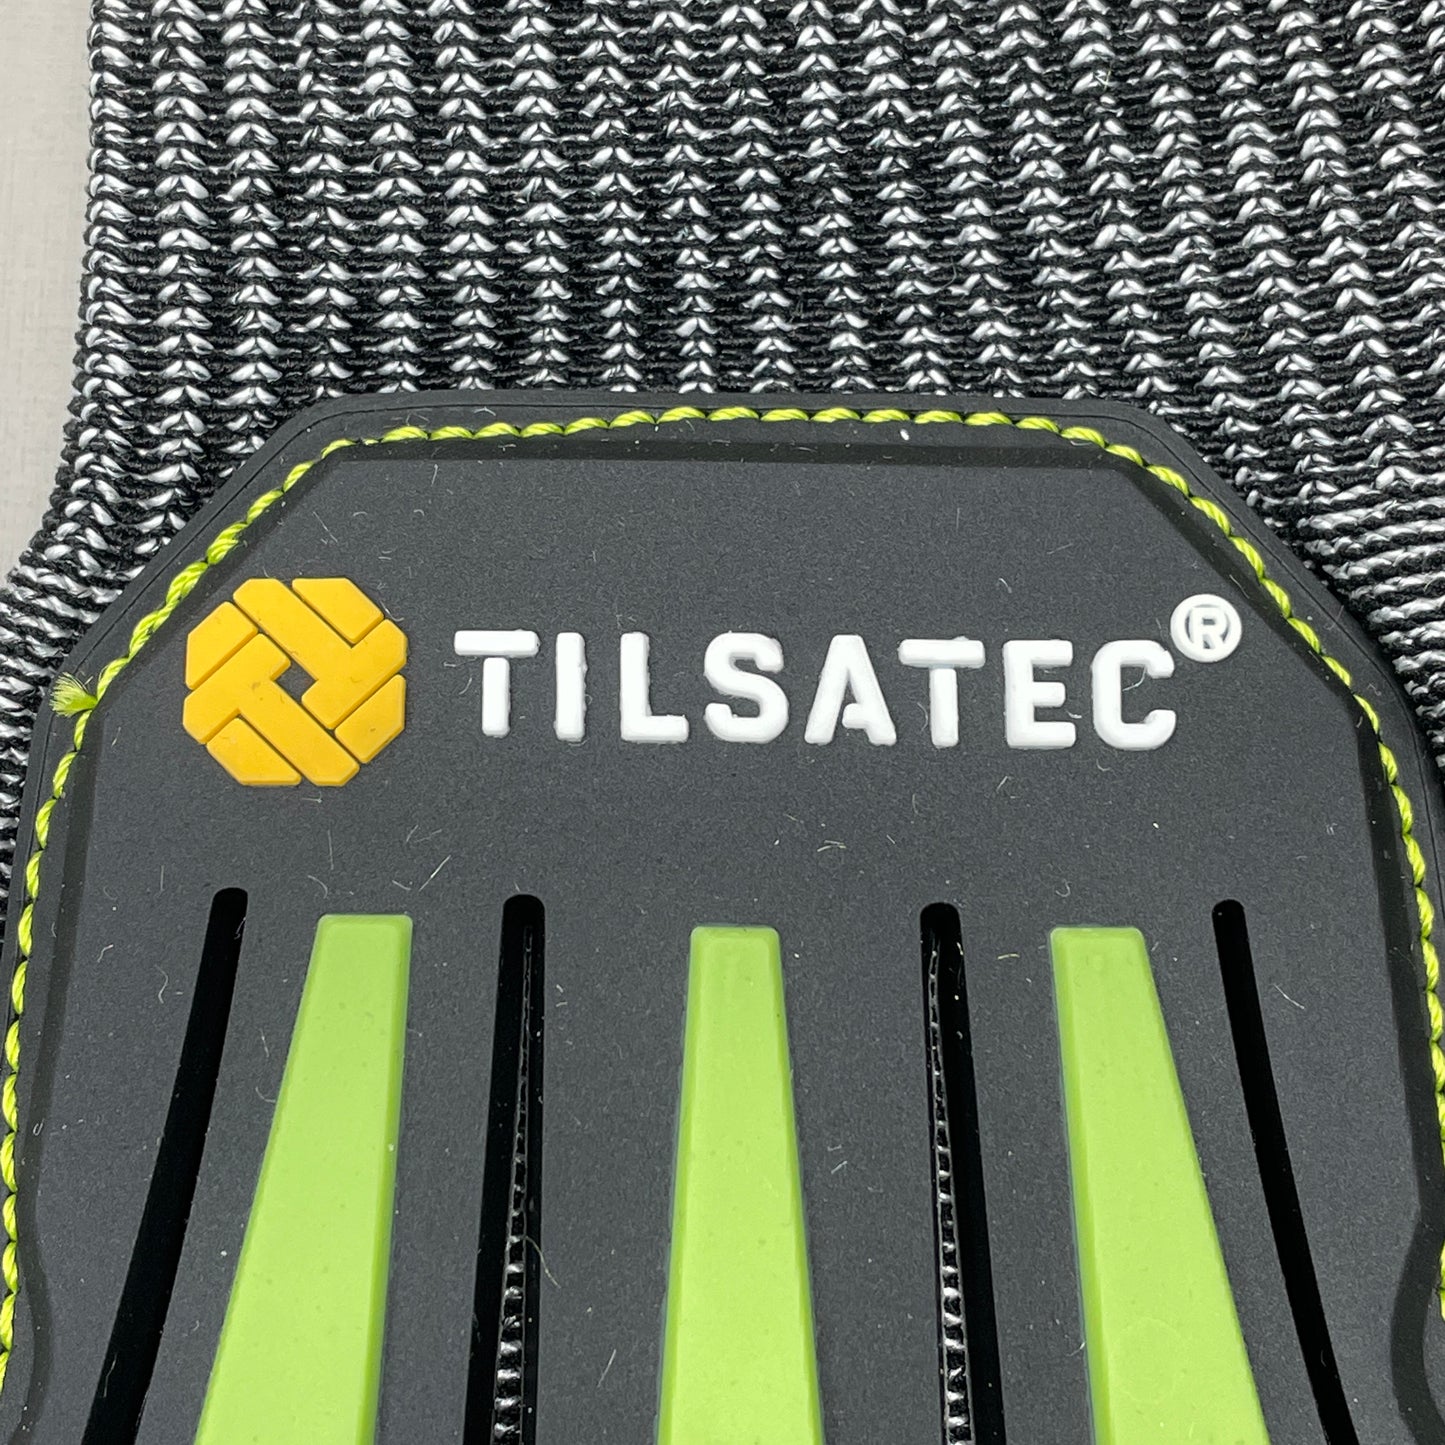 TILSATEC 2-PACK Cut & Puncture Resistant Gloves Sz XL Gray/Green/Black (New)